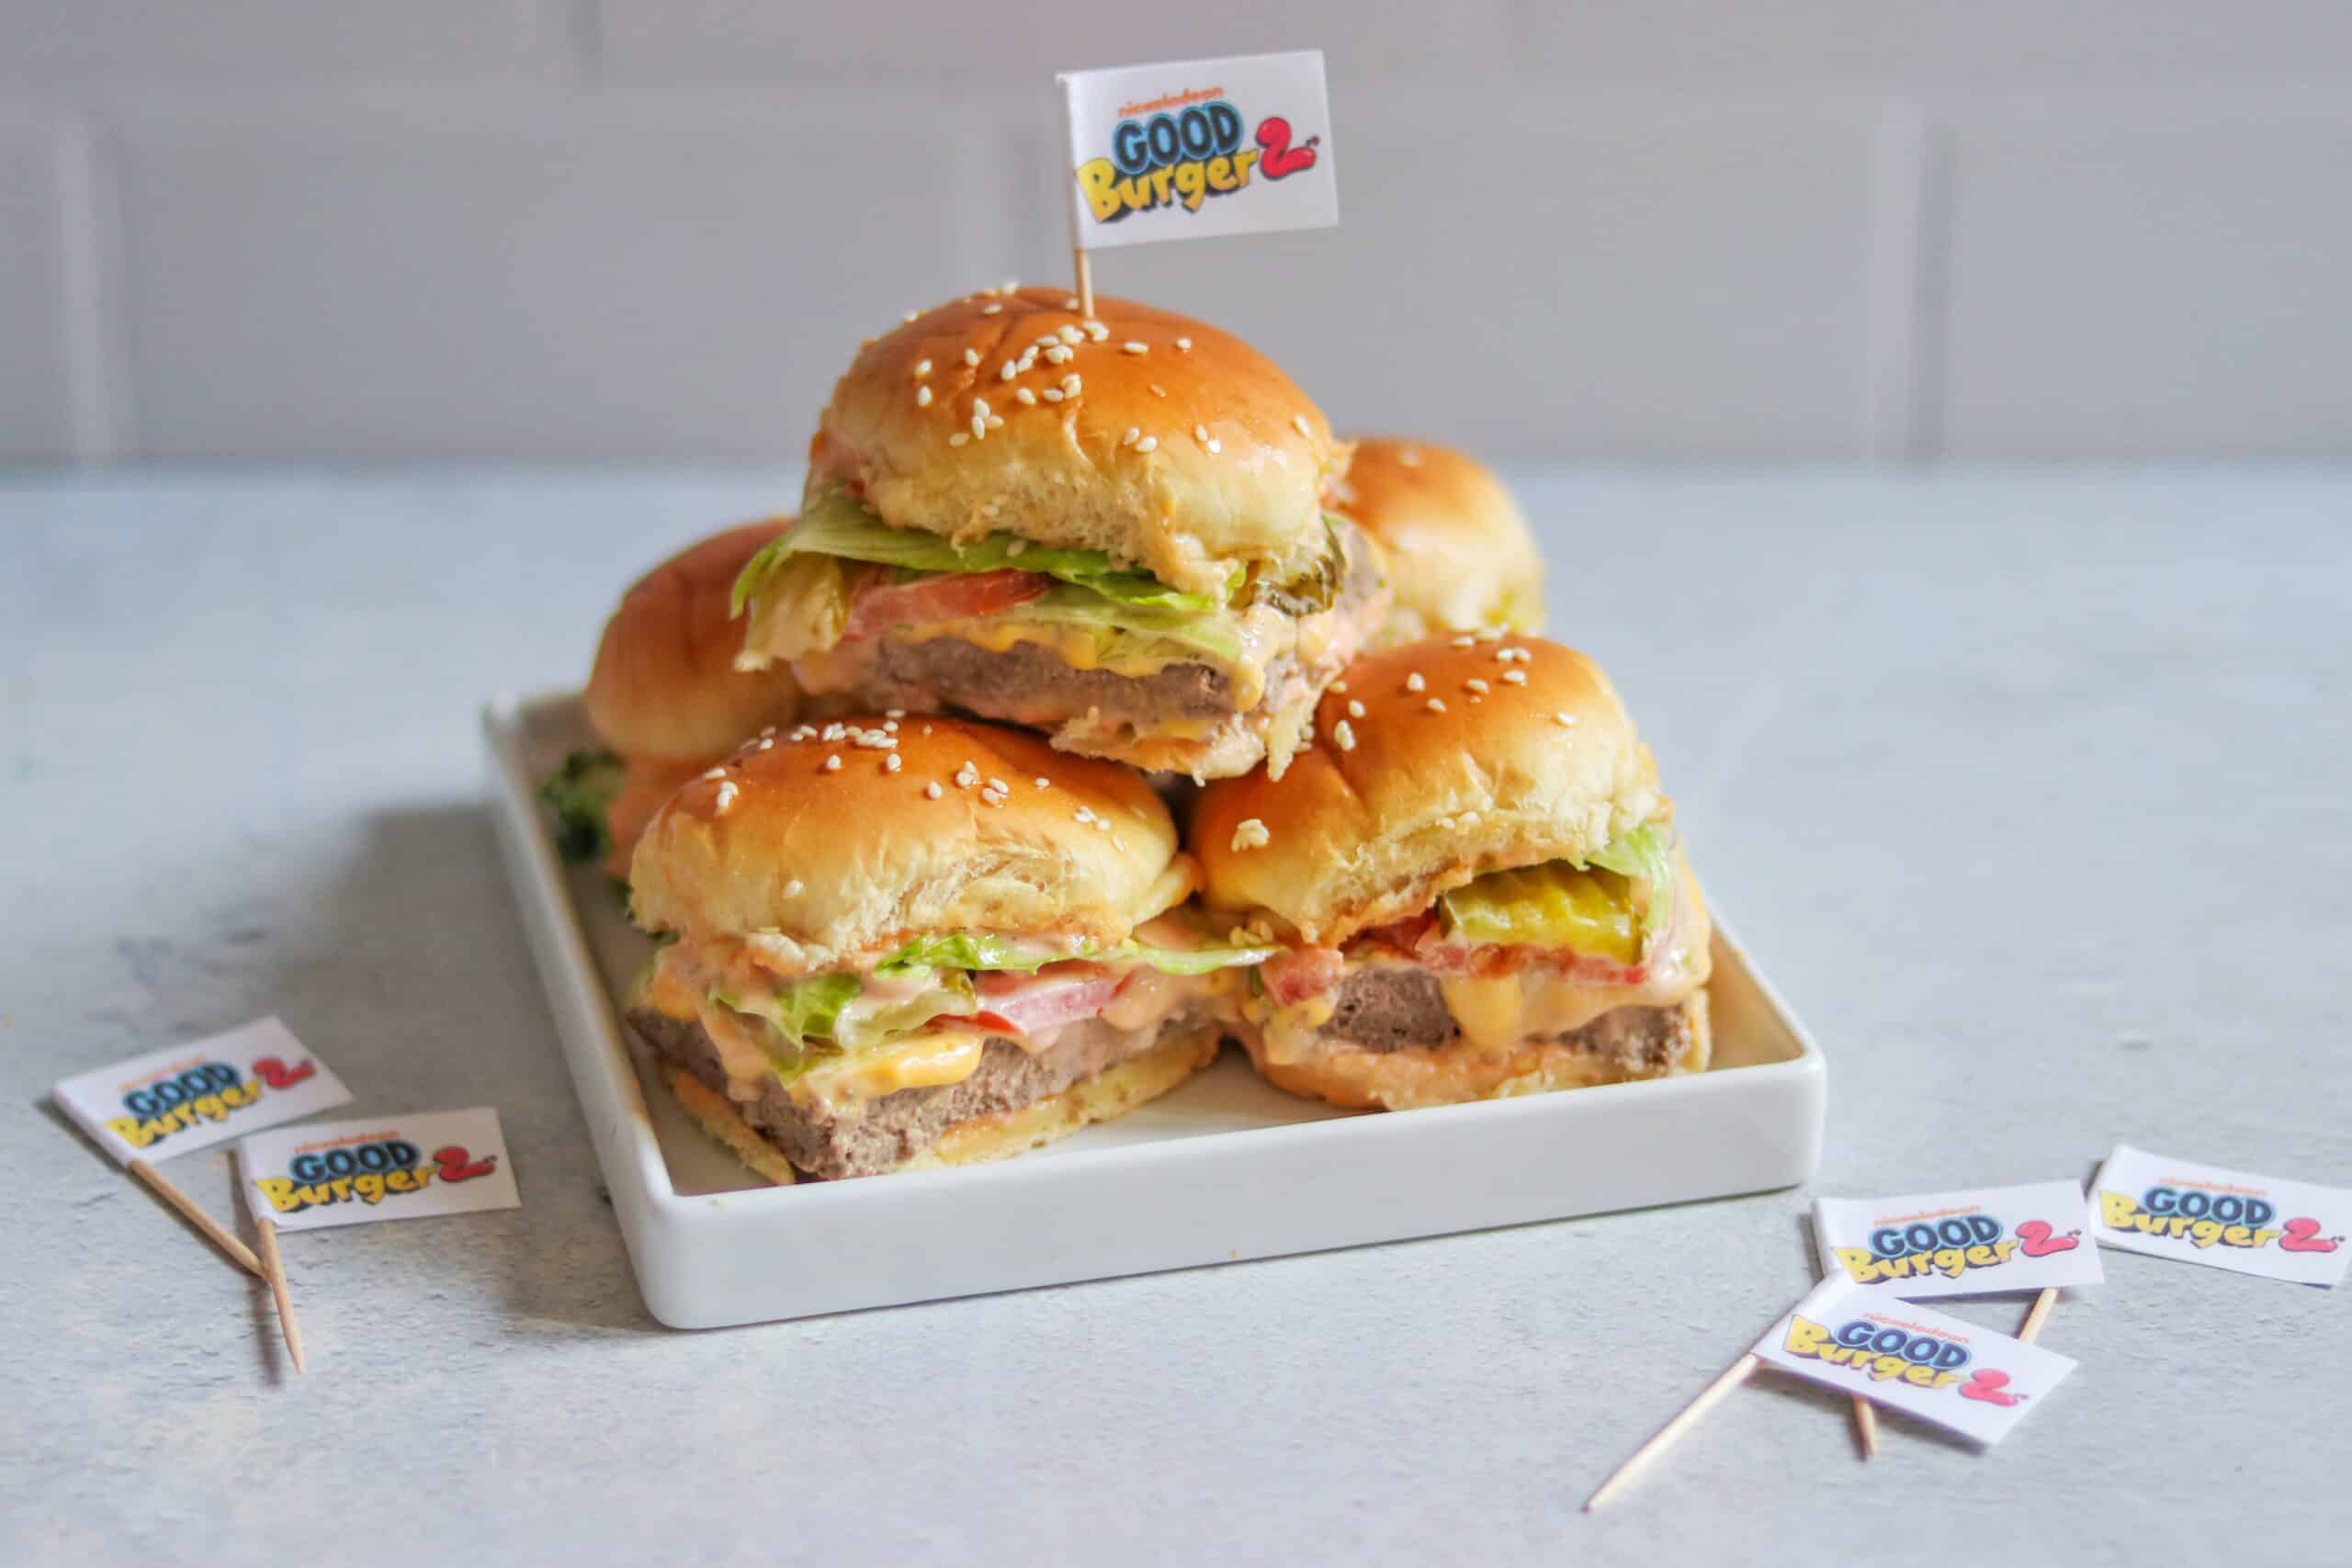 Good Burger Sliders (Good Burger movie recipe with Good Burger Ed's Sauce recipe)